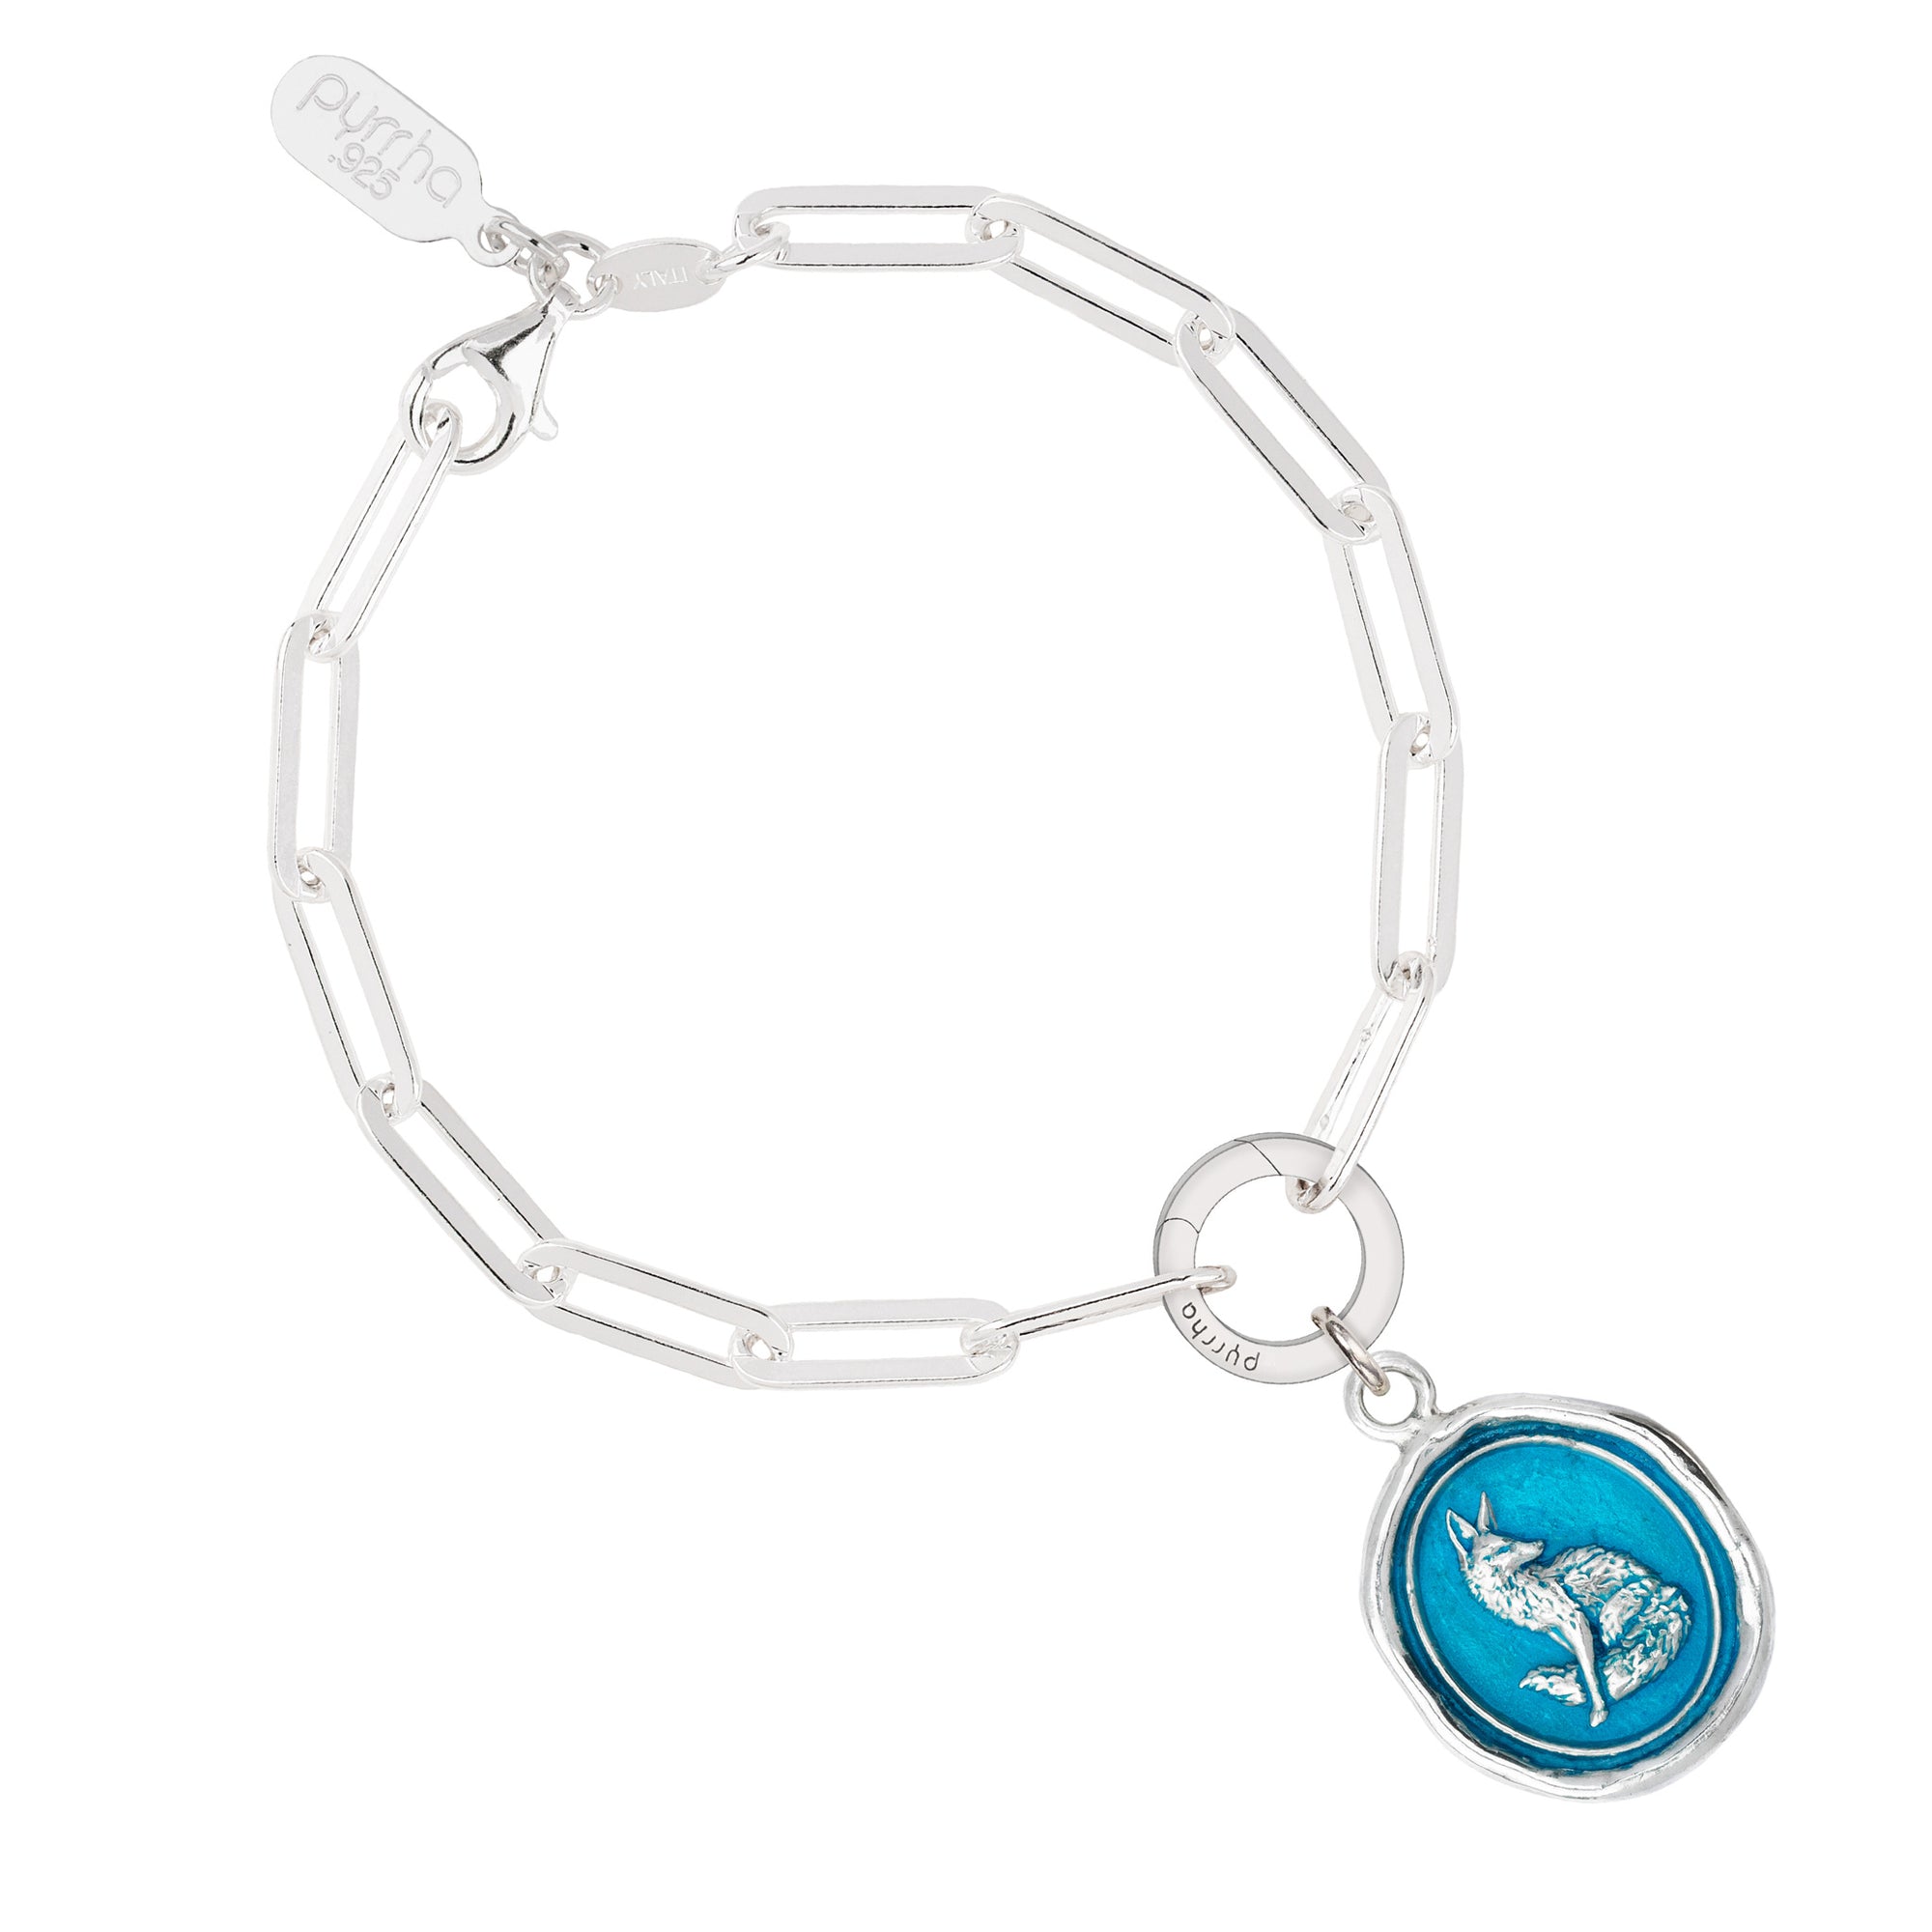 Trust in Yourself Paperclip Chain Bracelet - Capri Blue